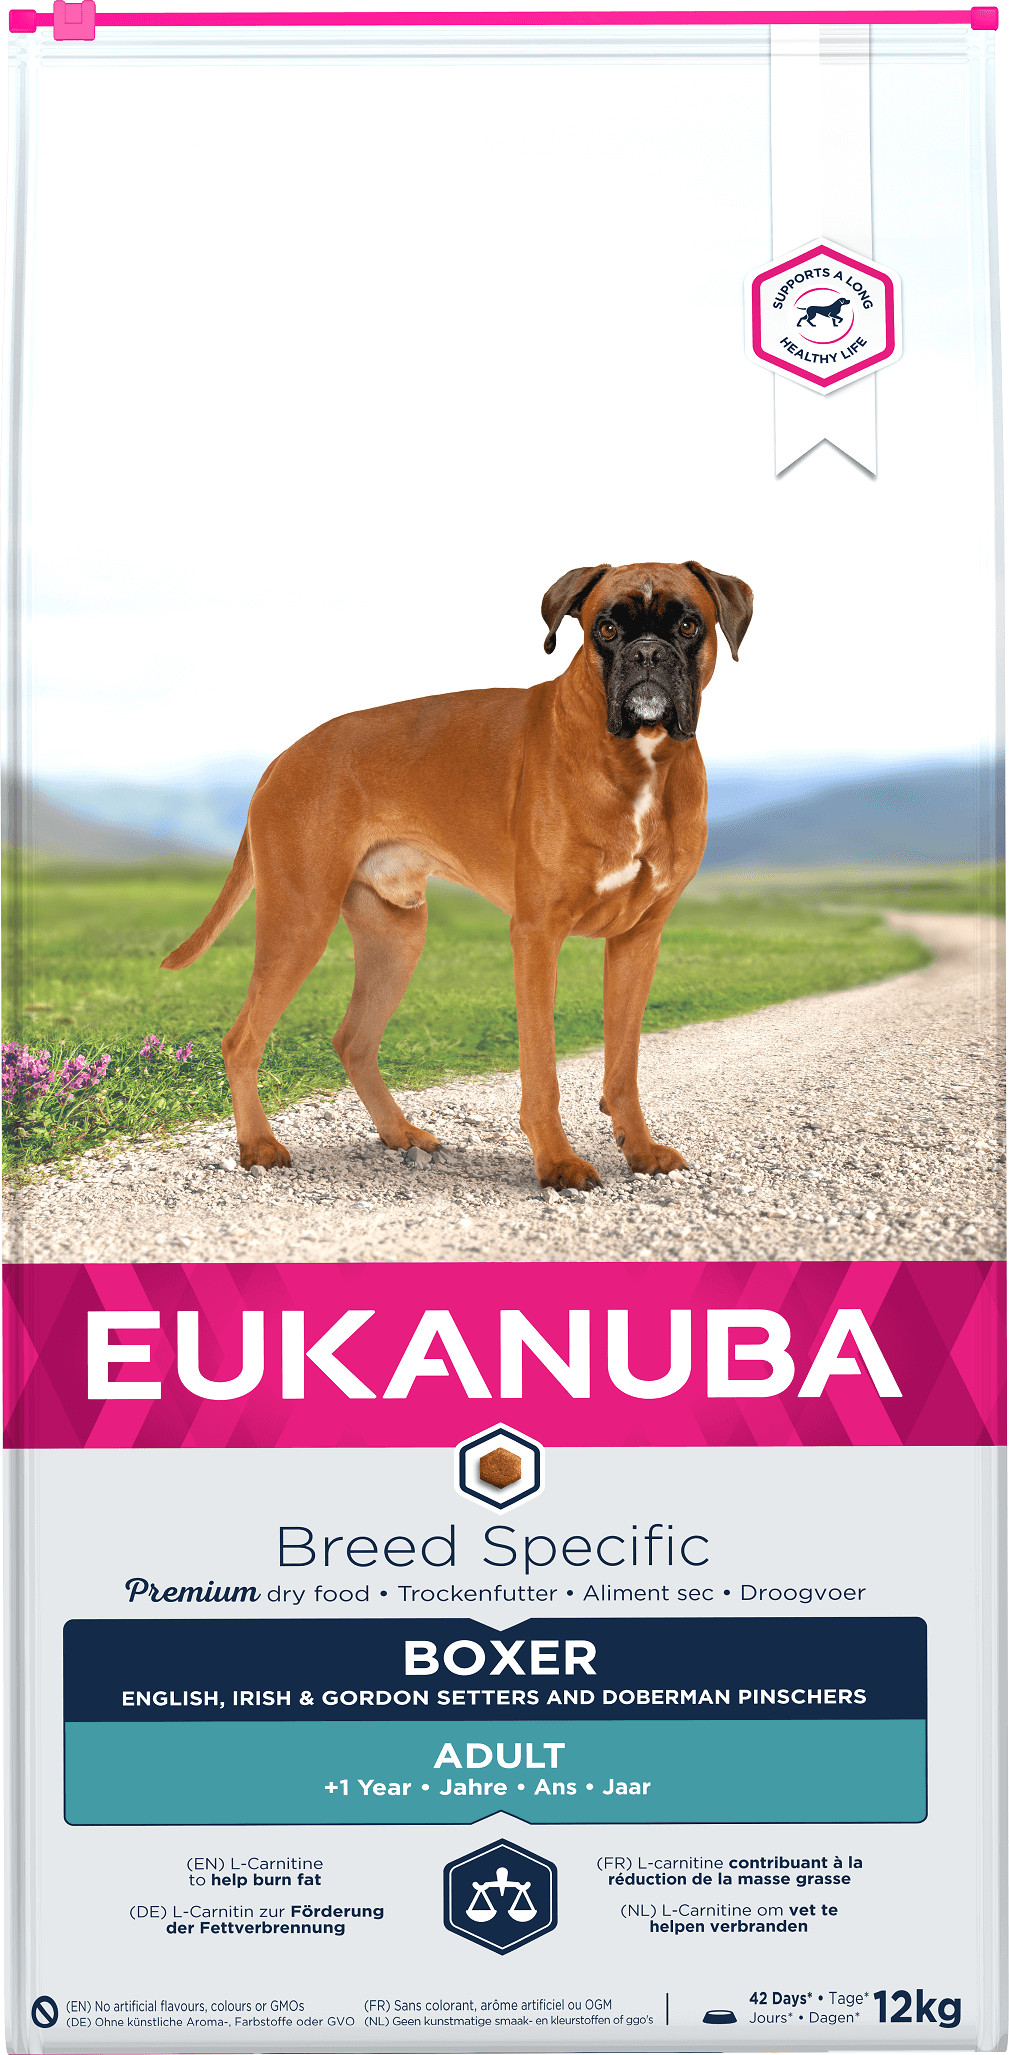 Eukanuba Boxer hundefoder